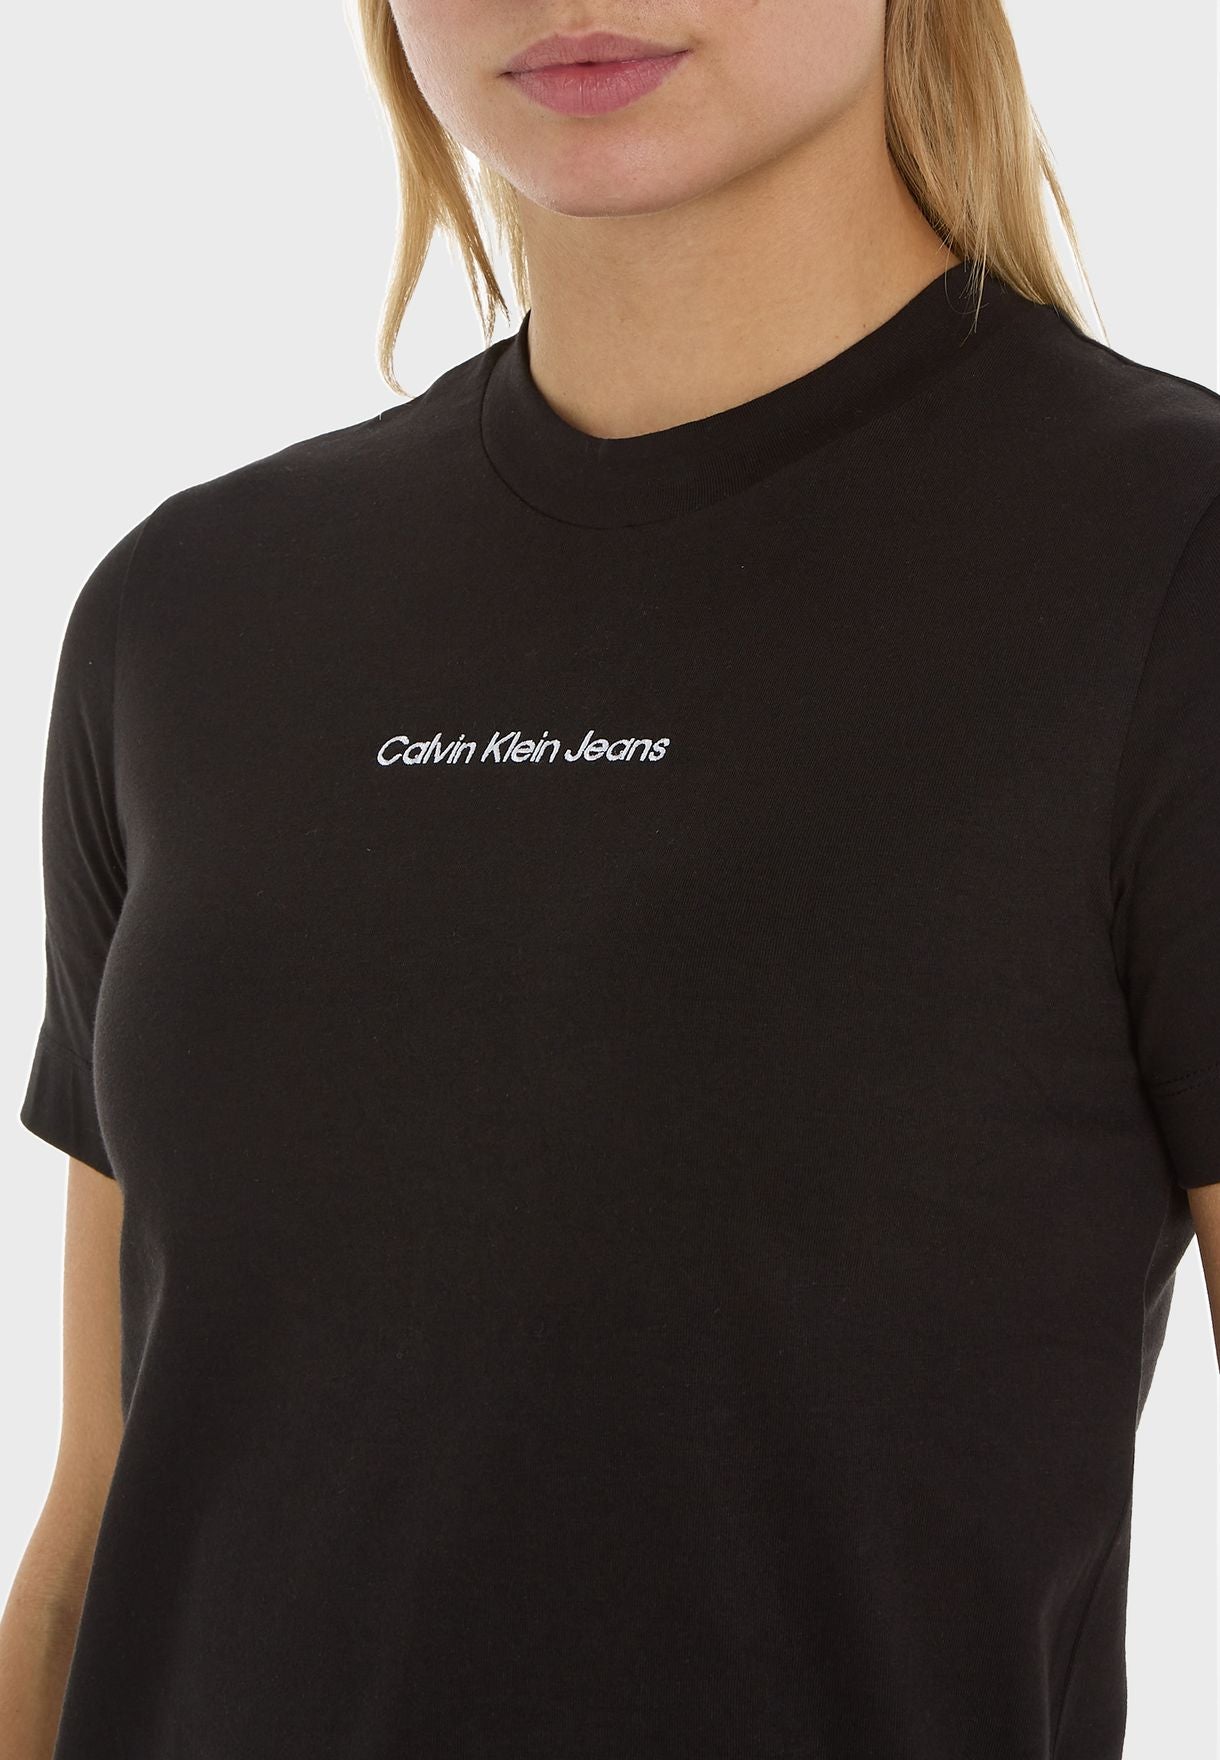 camiseta CALVIN KLEIN mujer negra